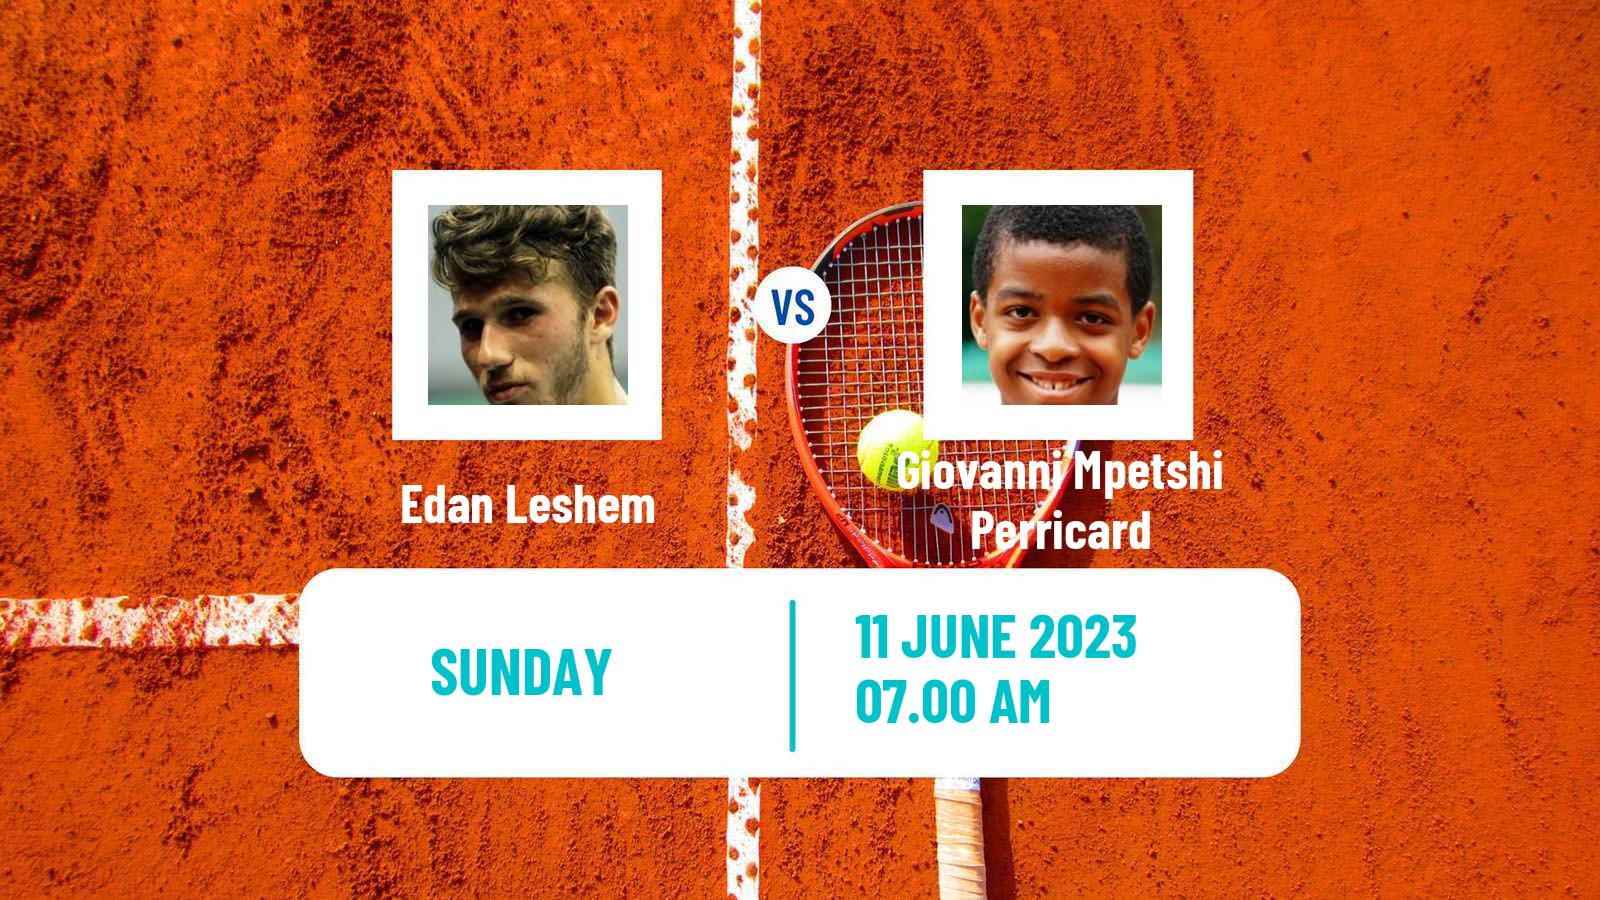 Tennis ATP Hertogenbosch Edan Leshem - Giovanni Mpetshi Perricard